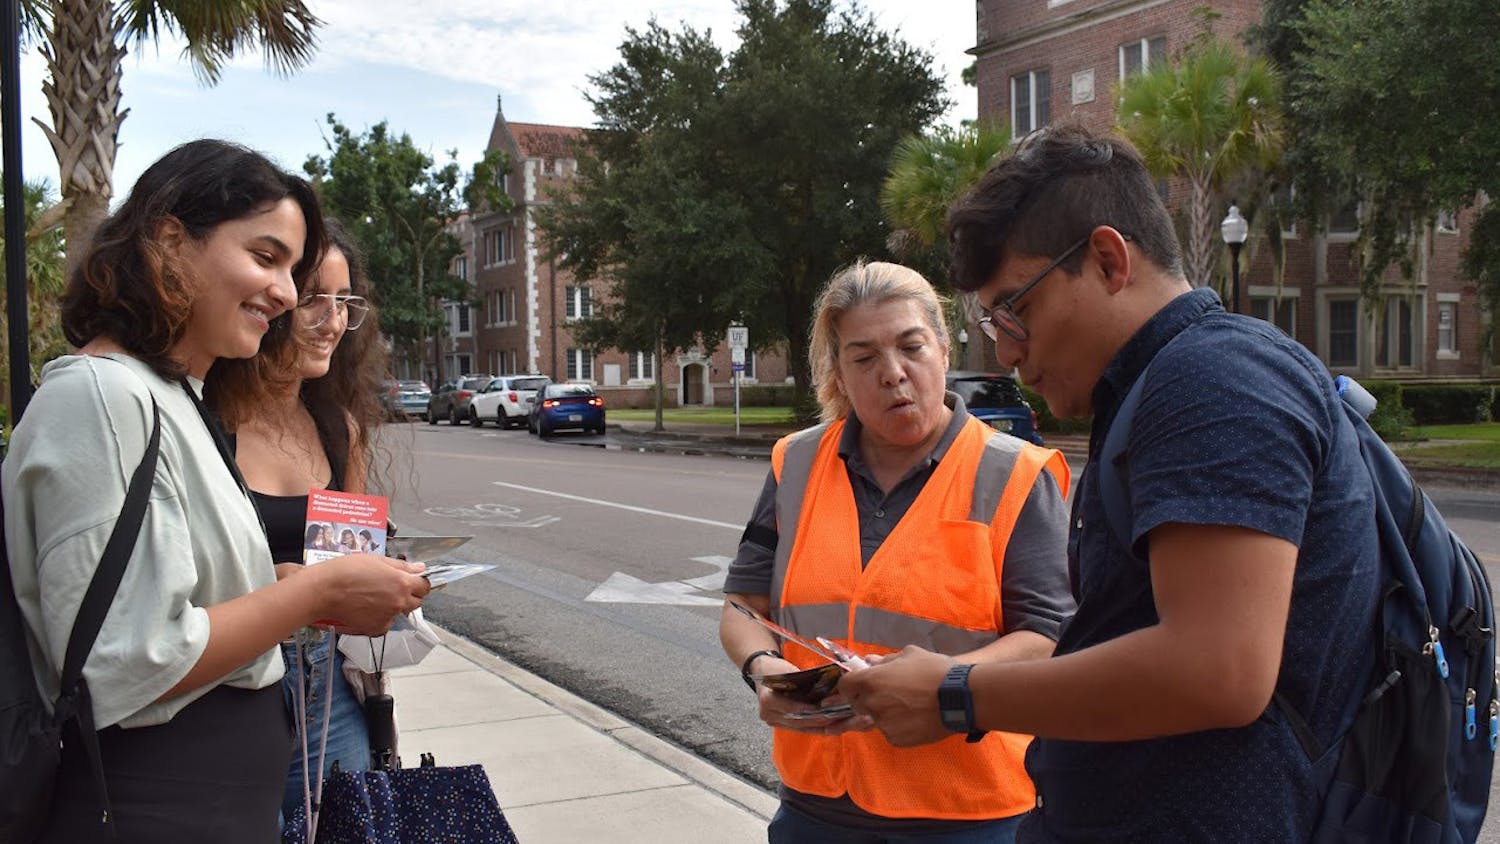 Paula Gonzalez, FDOT communication staff member, talks to students about pedestrian safety outside the UF chemistry building on Buckman Drive on Thursday, Aug. 26, 2021. (Photo by Elena Barrera)